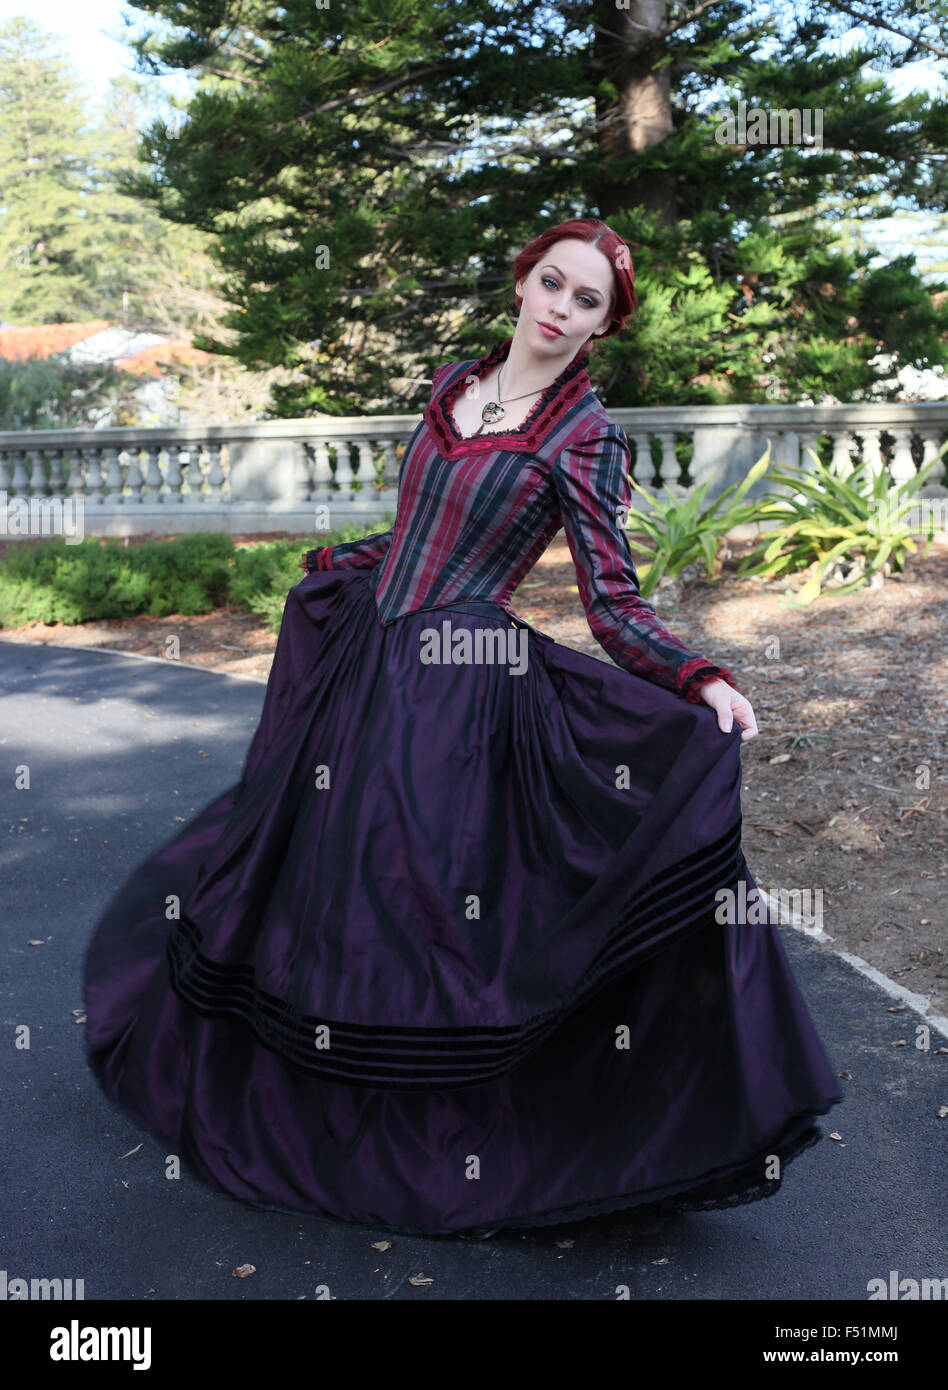 Retrato de una hermosa niña de cabello rojo vestidos inspiración gótica victoriana. ropa o romance era Fotografía de stock -